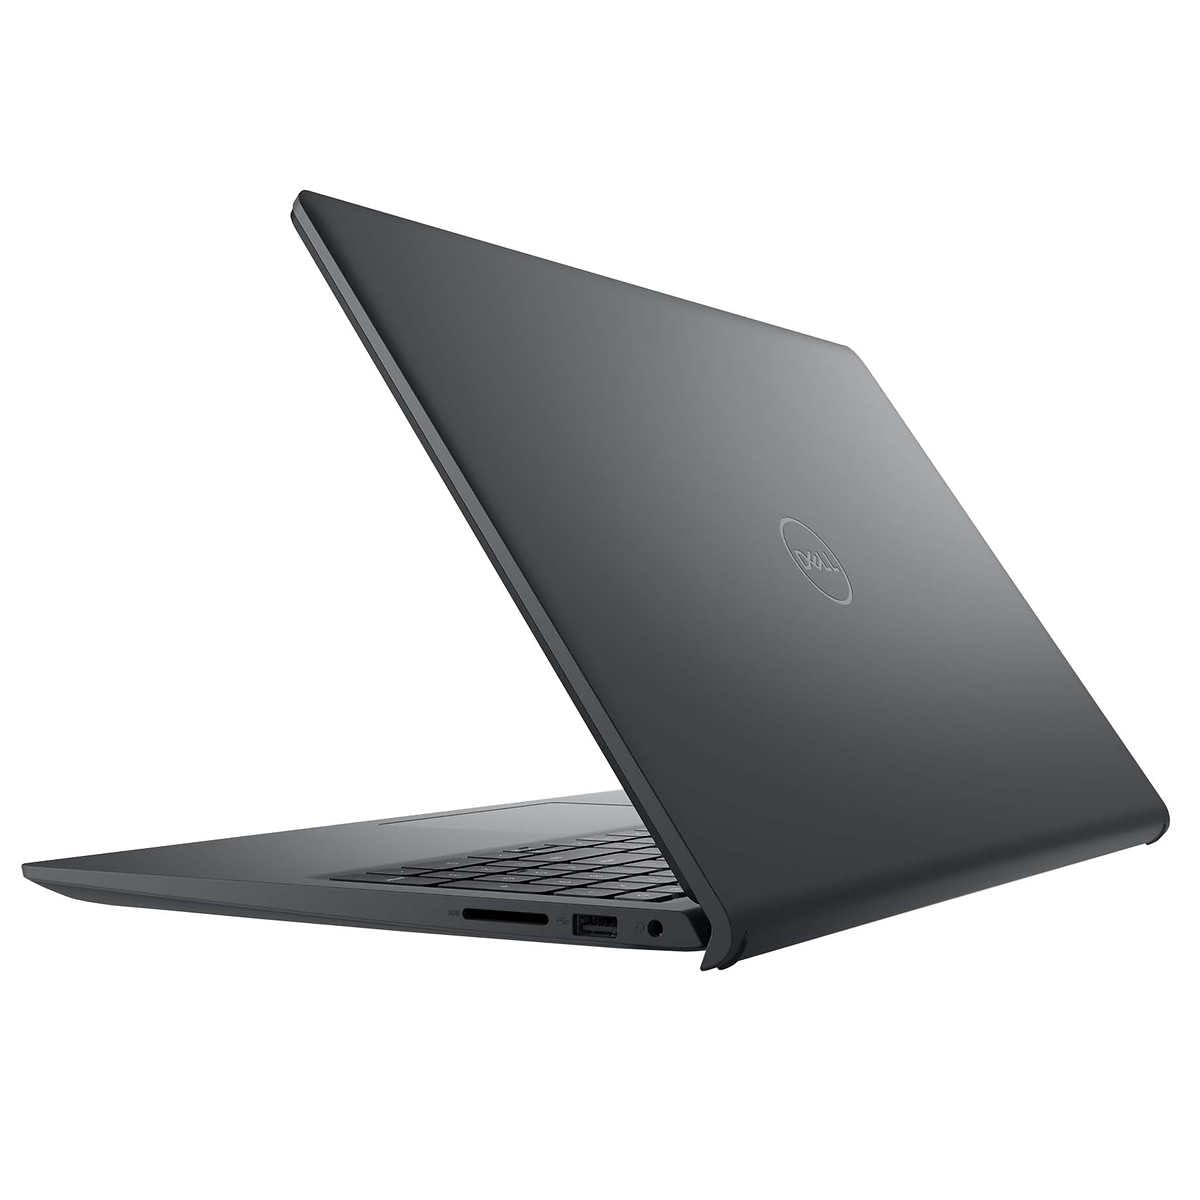 Dell Inspiron 15 3000 3530 Laptop Computer [Windows 11 Pro], 15.6